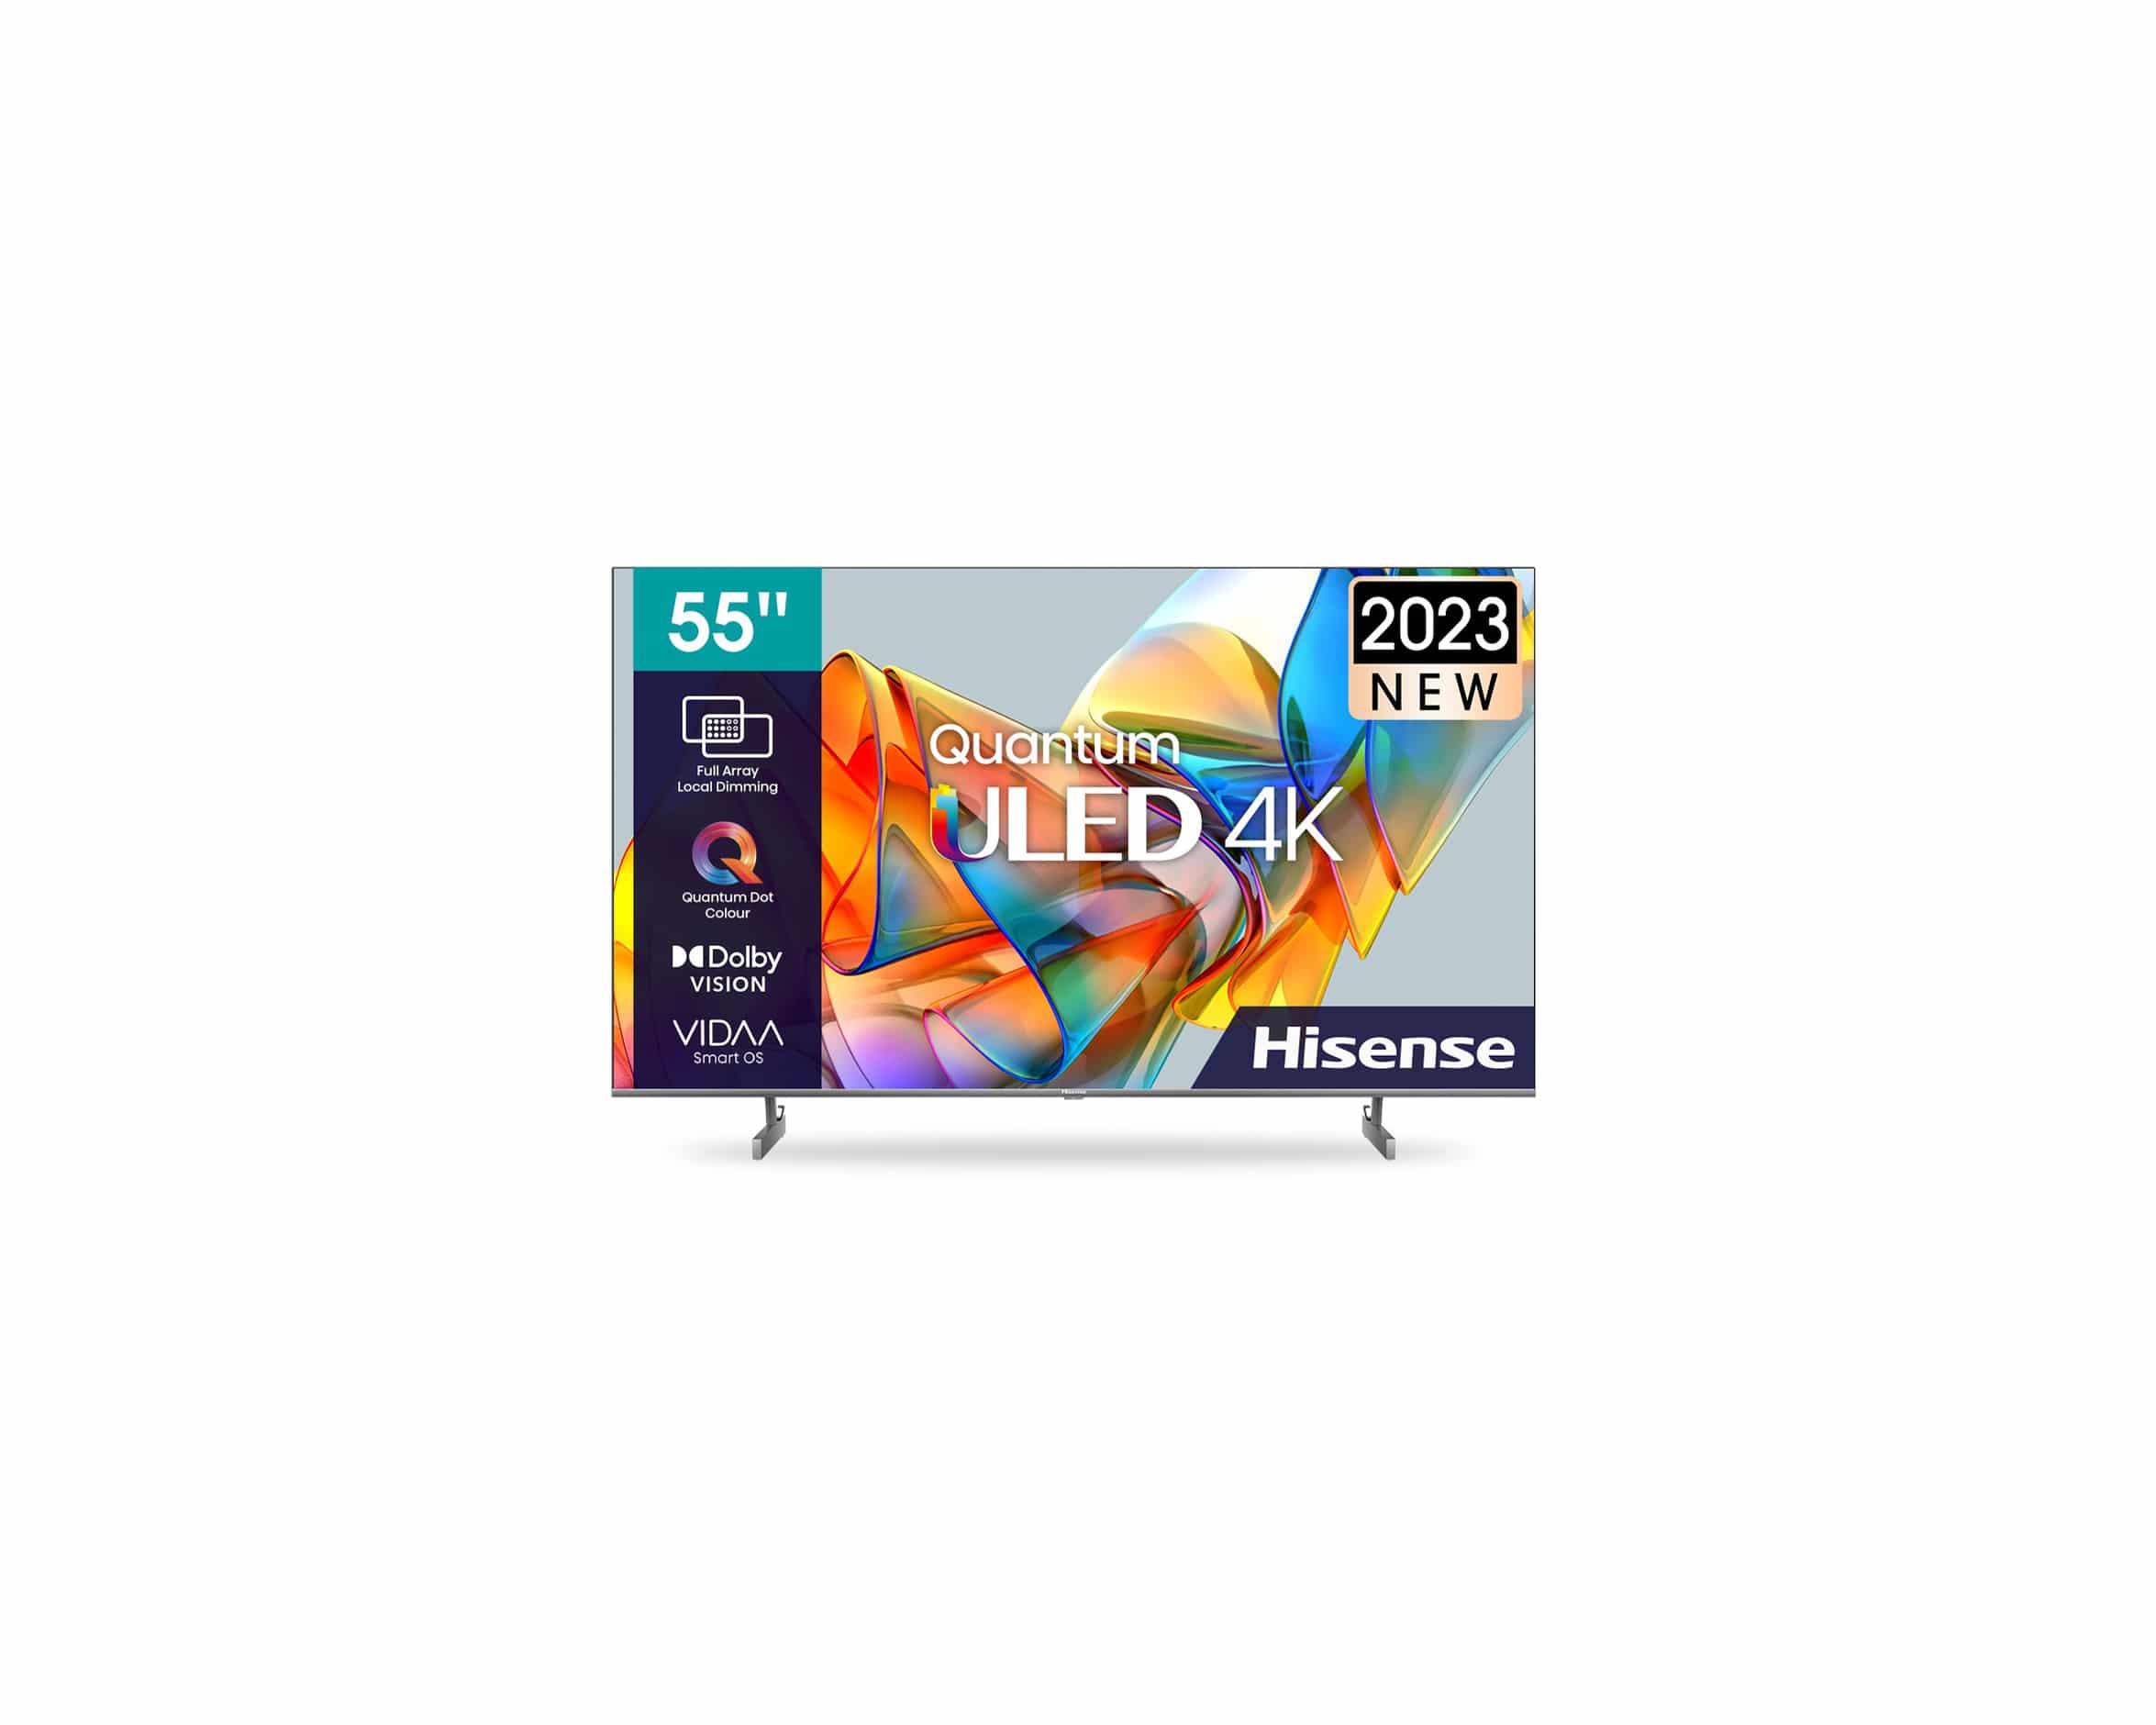 Hisense Launches Affordable U6K ULED 4K Mini LED TV Series - My Site